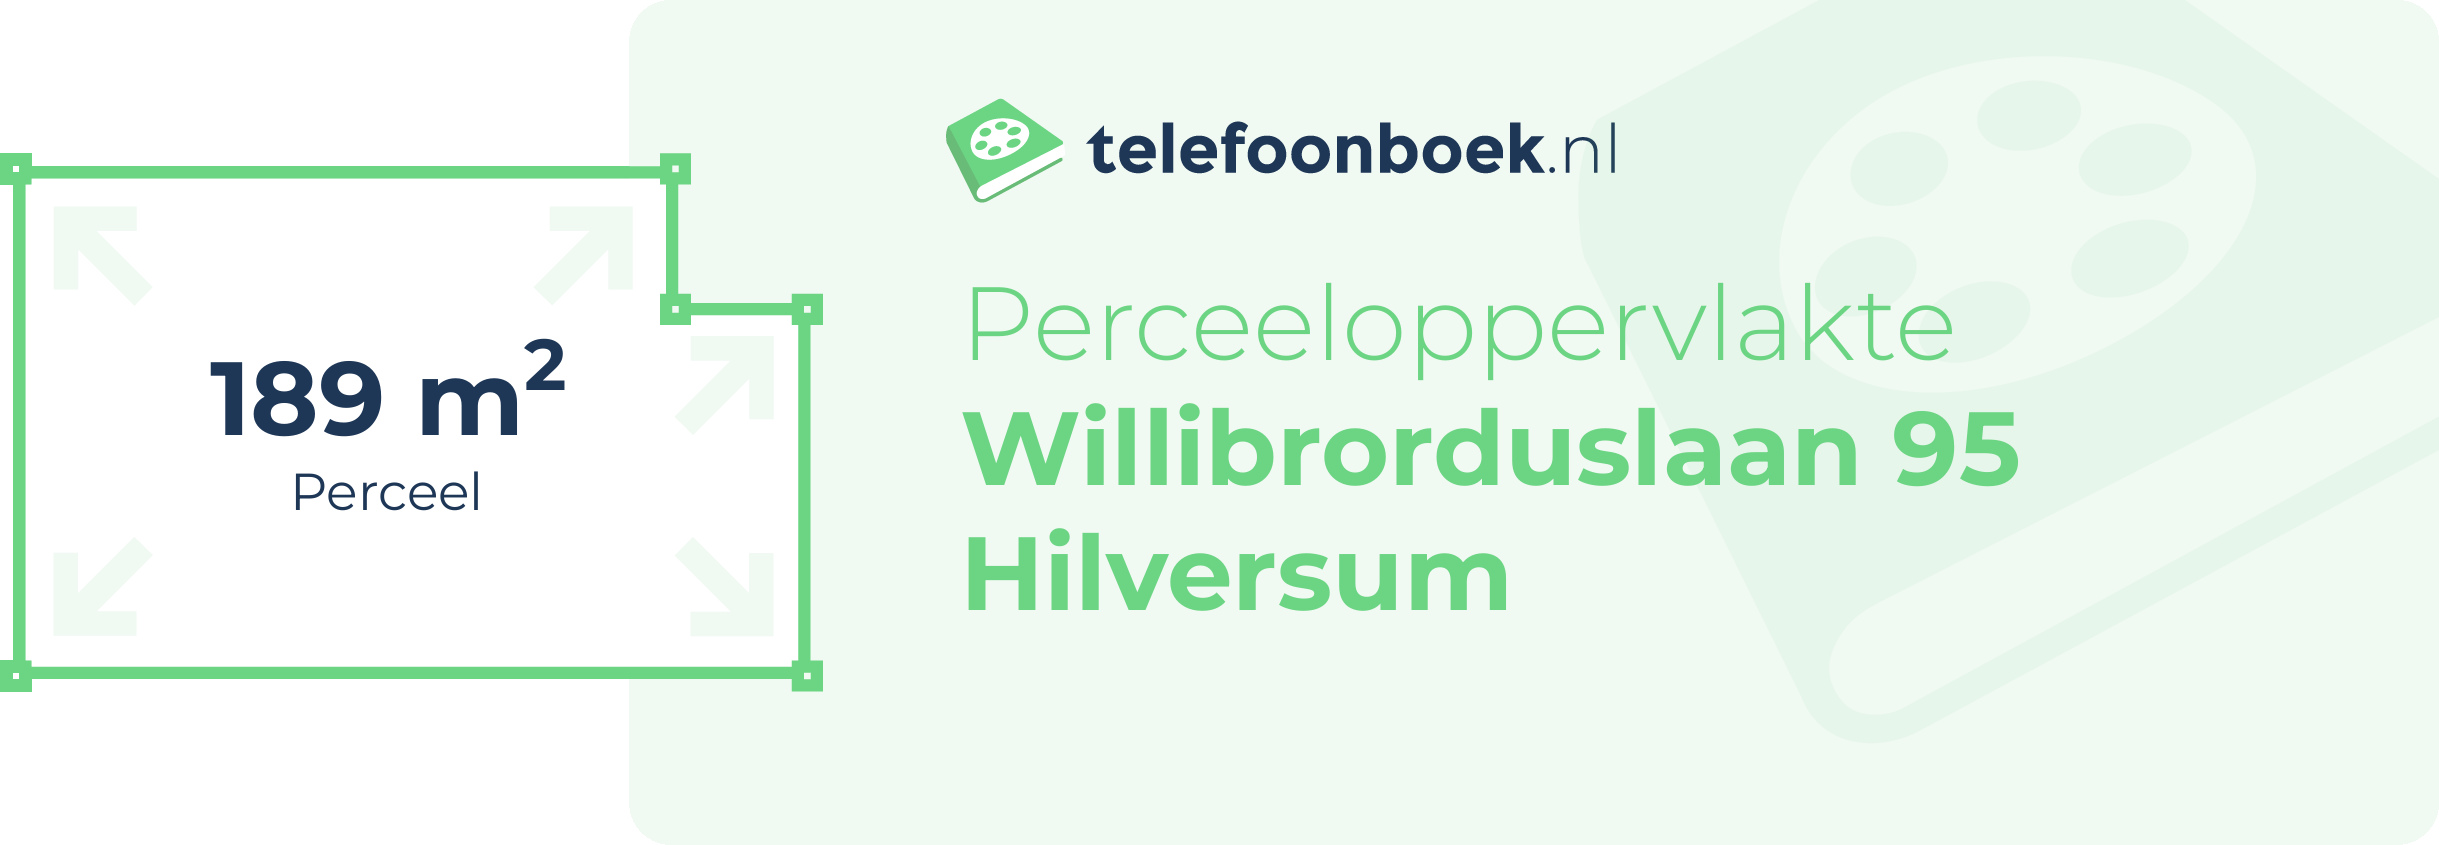 Perceeloppervlakte Willibrorduslaan 95 Hilversum